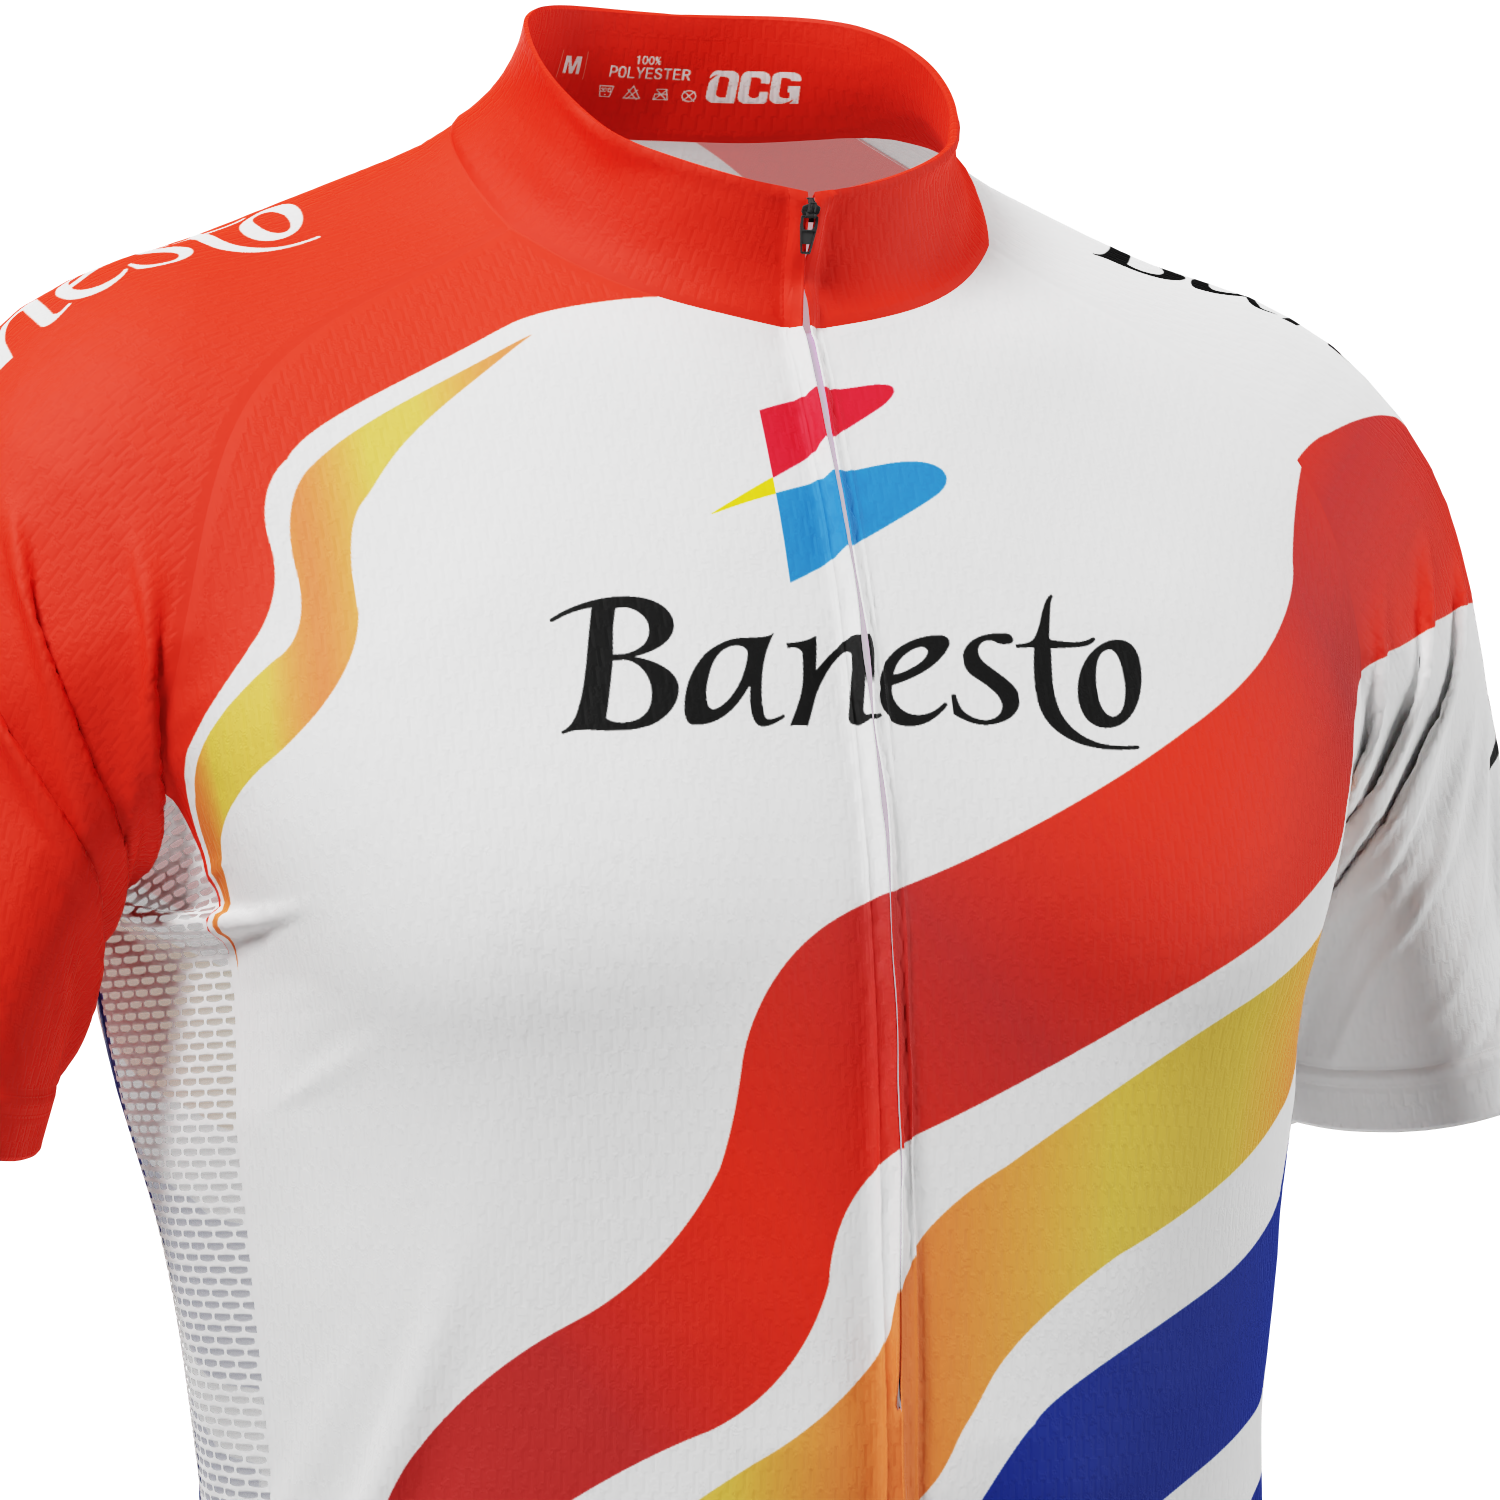 Men's Banesto Retro 1990 Short Sleeve Cycling Jersey